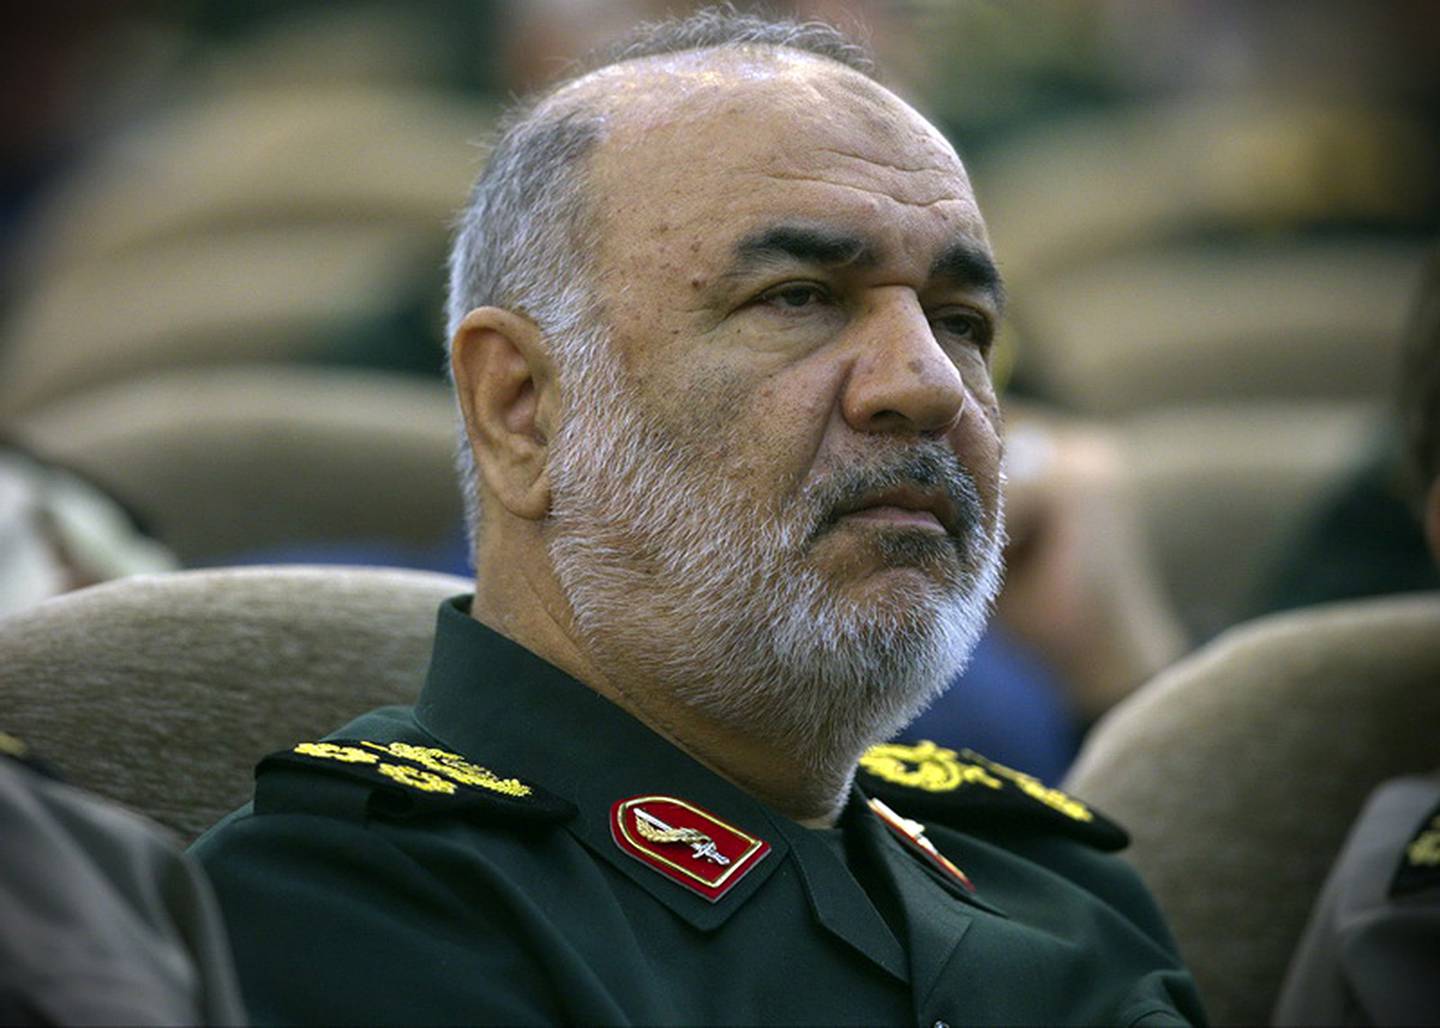 Iran's Revolutionary Guard commander Gen. Hossein Salami